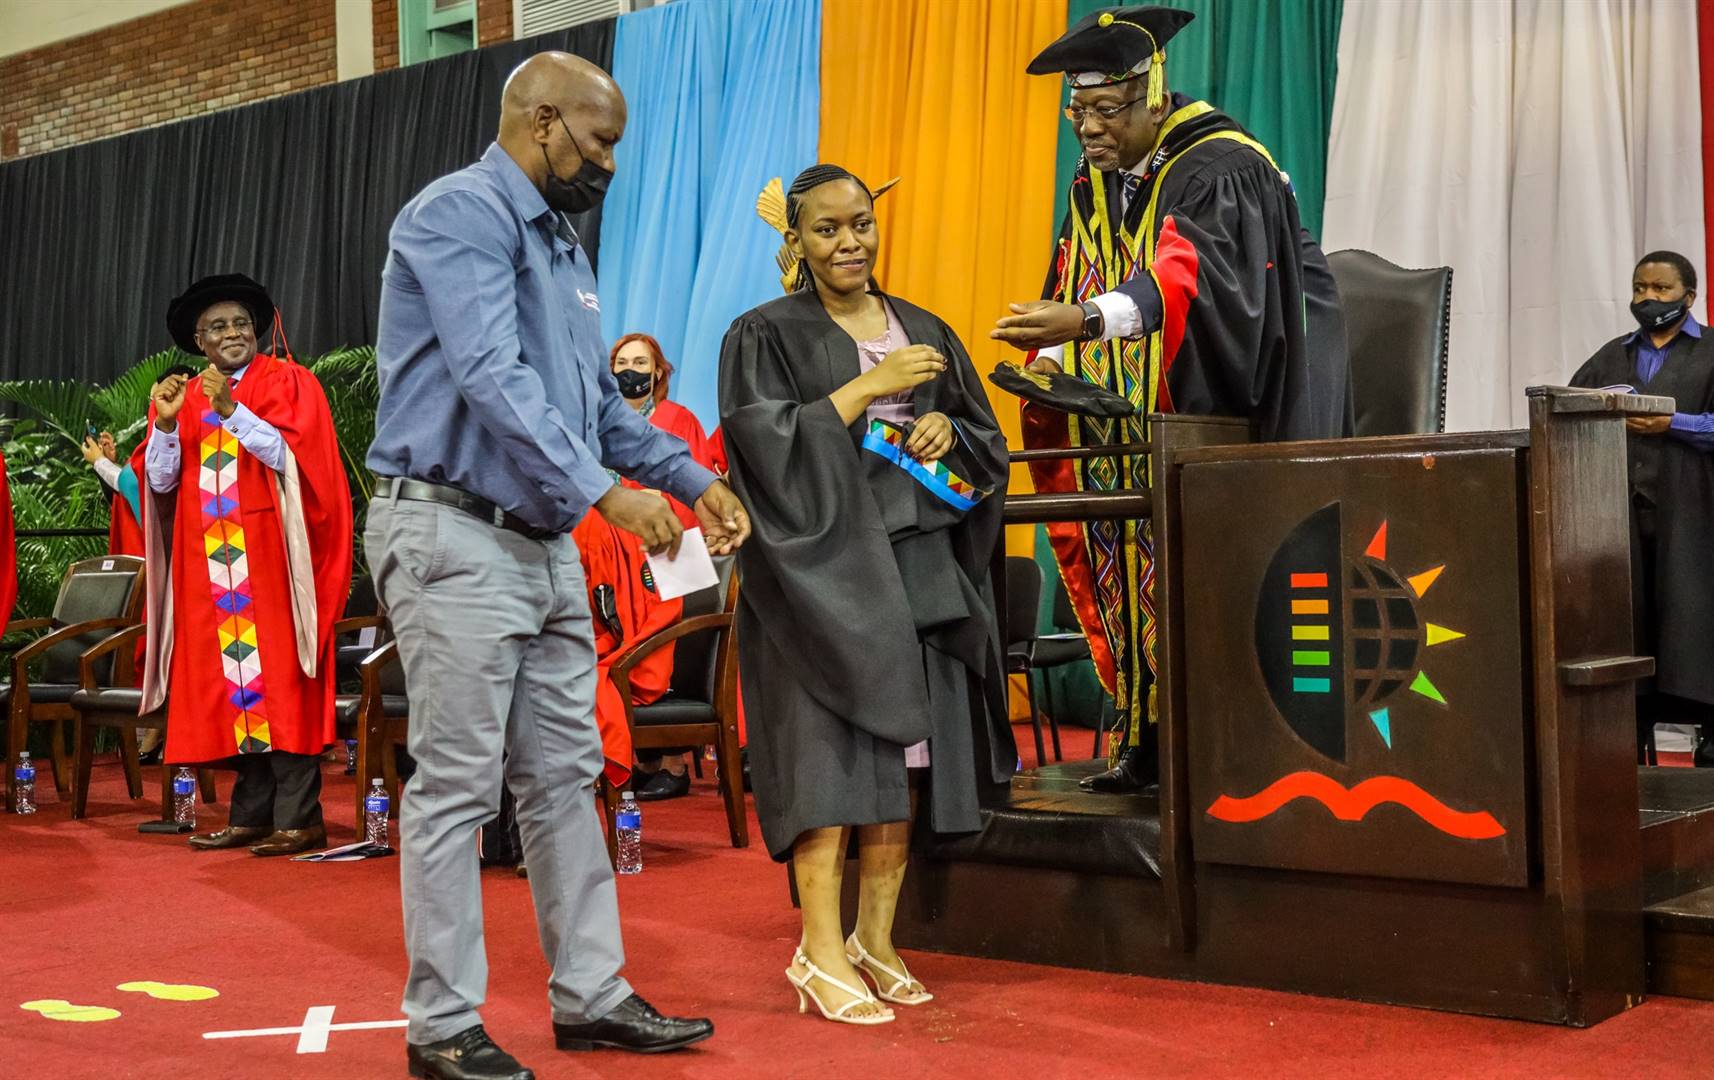 Vice-Chancellor and Principal, Professor Nana Poku capping blind graduate Masibonge Mkhize at her graduation ceremony at the University of KwaZulu-Natal Westville campus earlier this week.PHOTO: Abhi Indrarajan